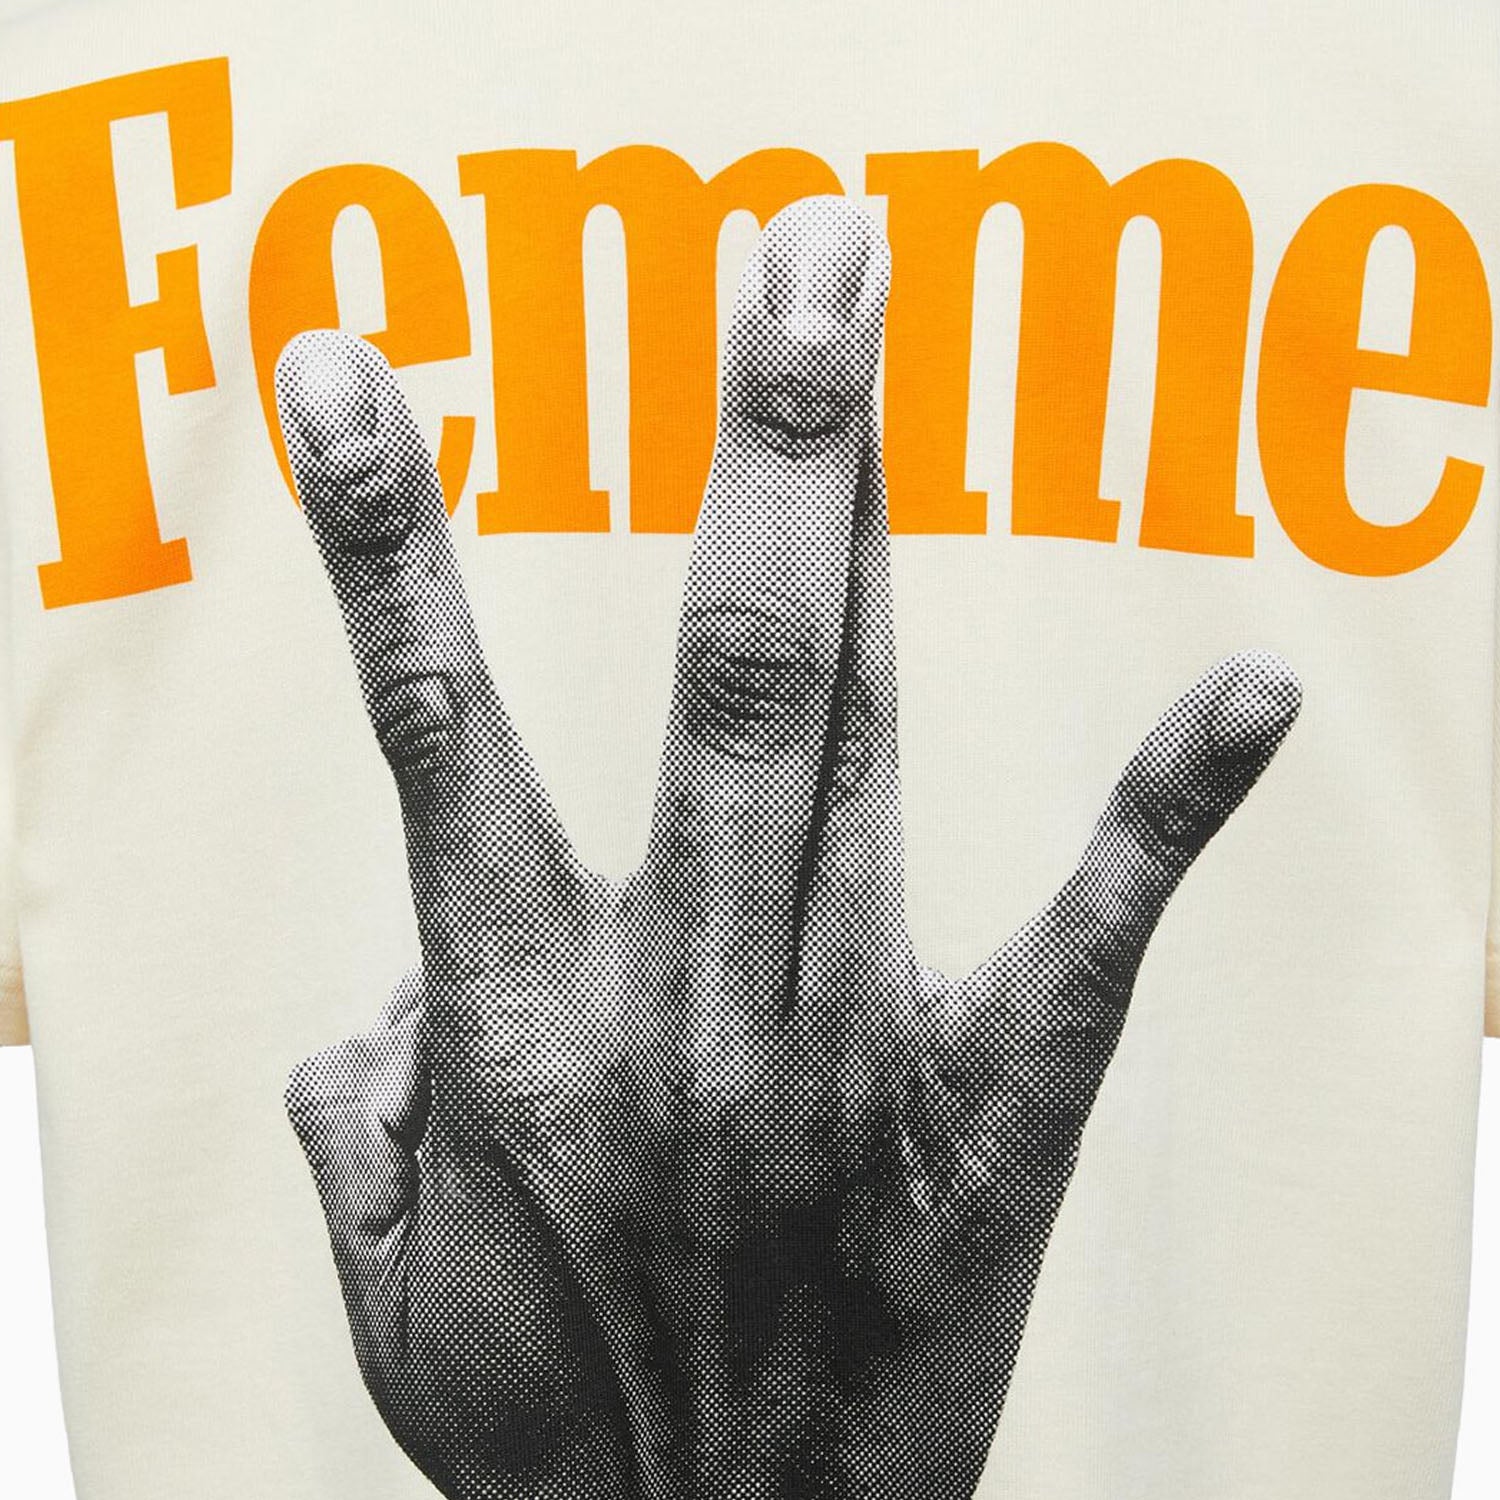 Men's Twisted Fingers T Shirt